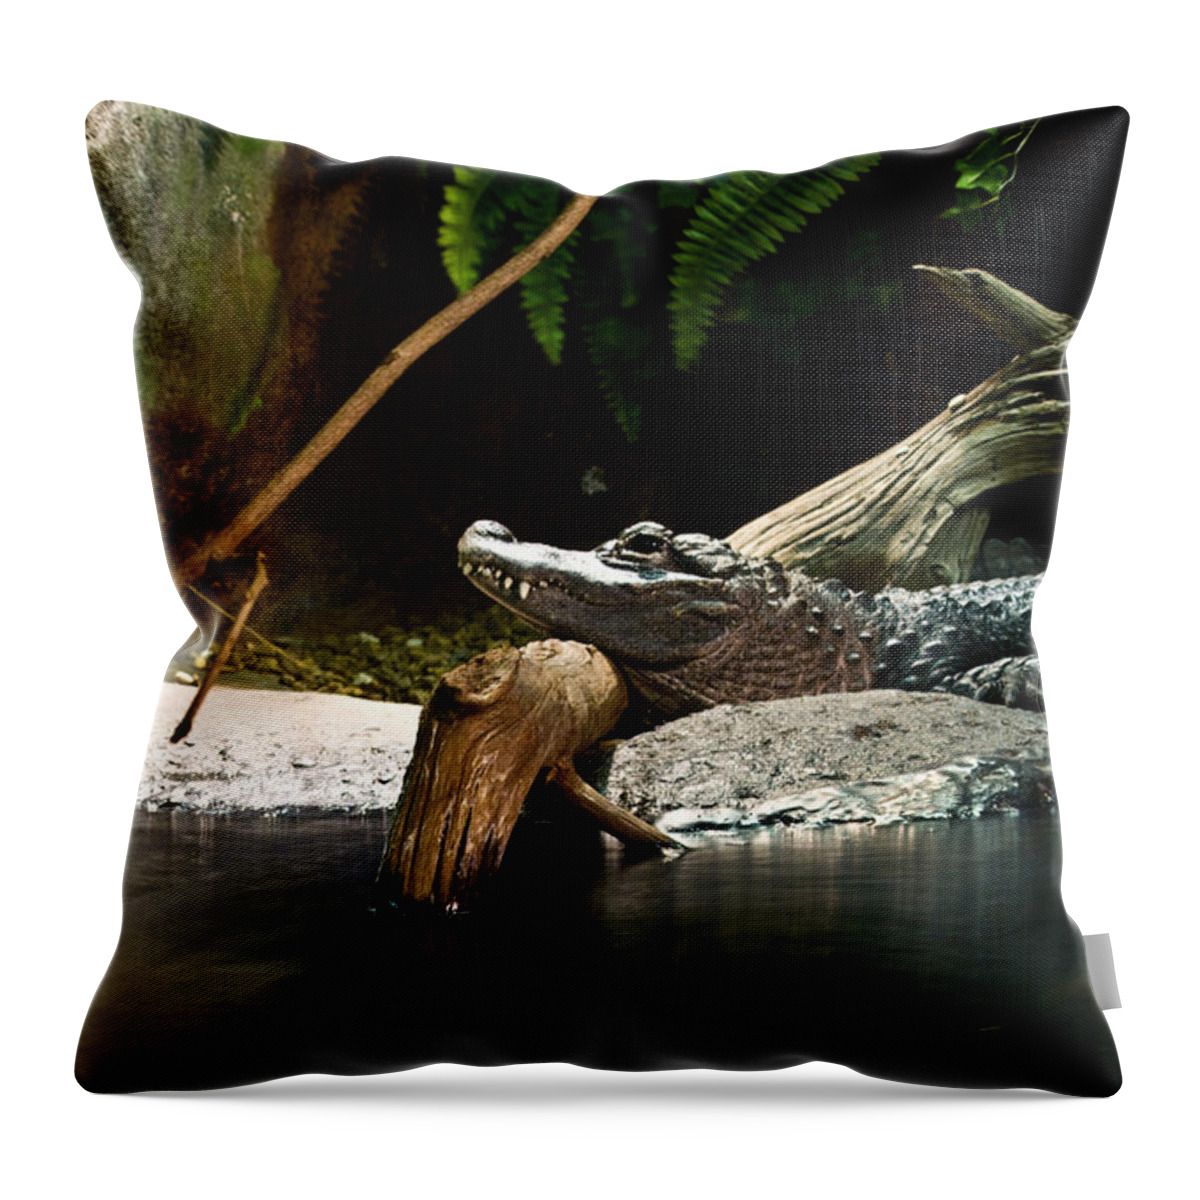 Alligator Throw Pillow featuring the photograph Allegator Resting by Douglas Barnett